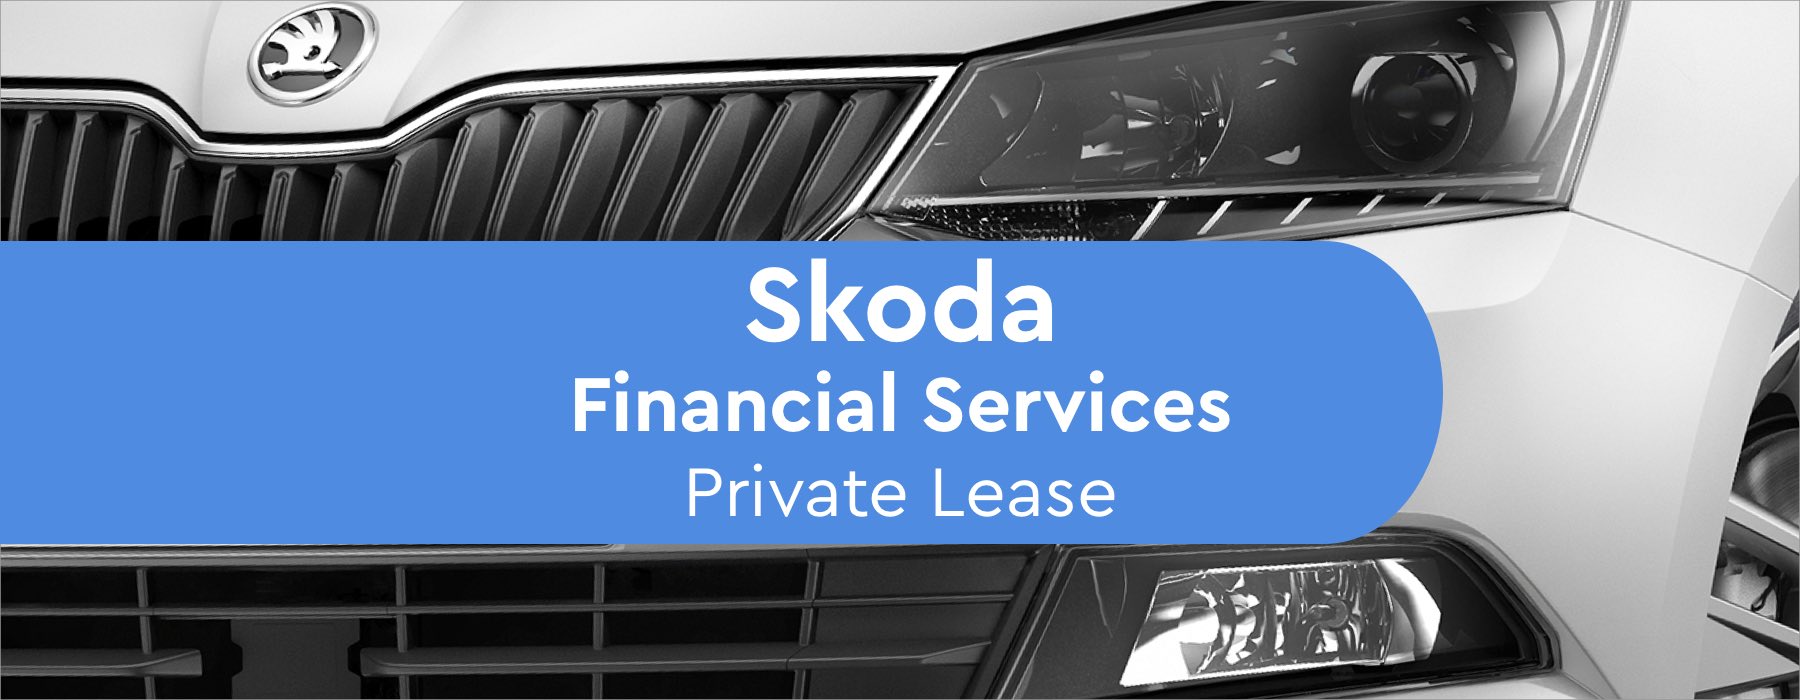 skoda financial services Private Lease